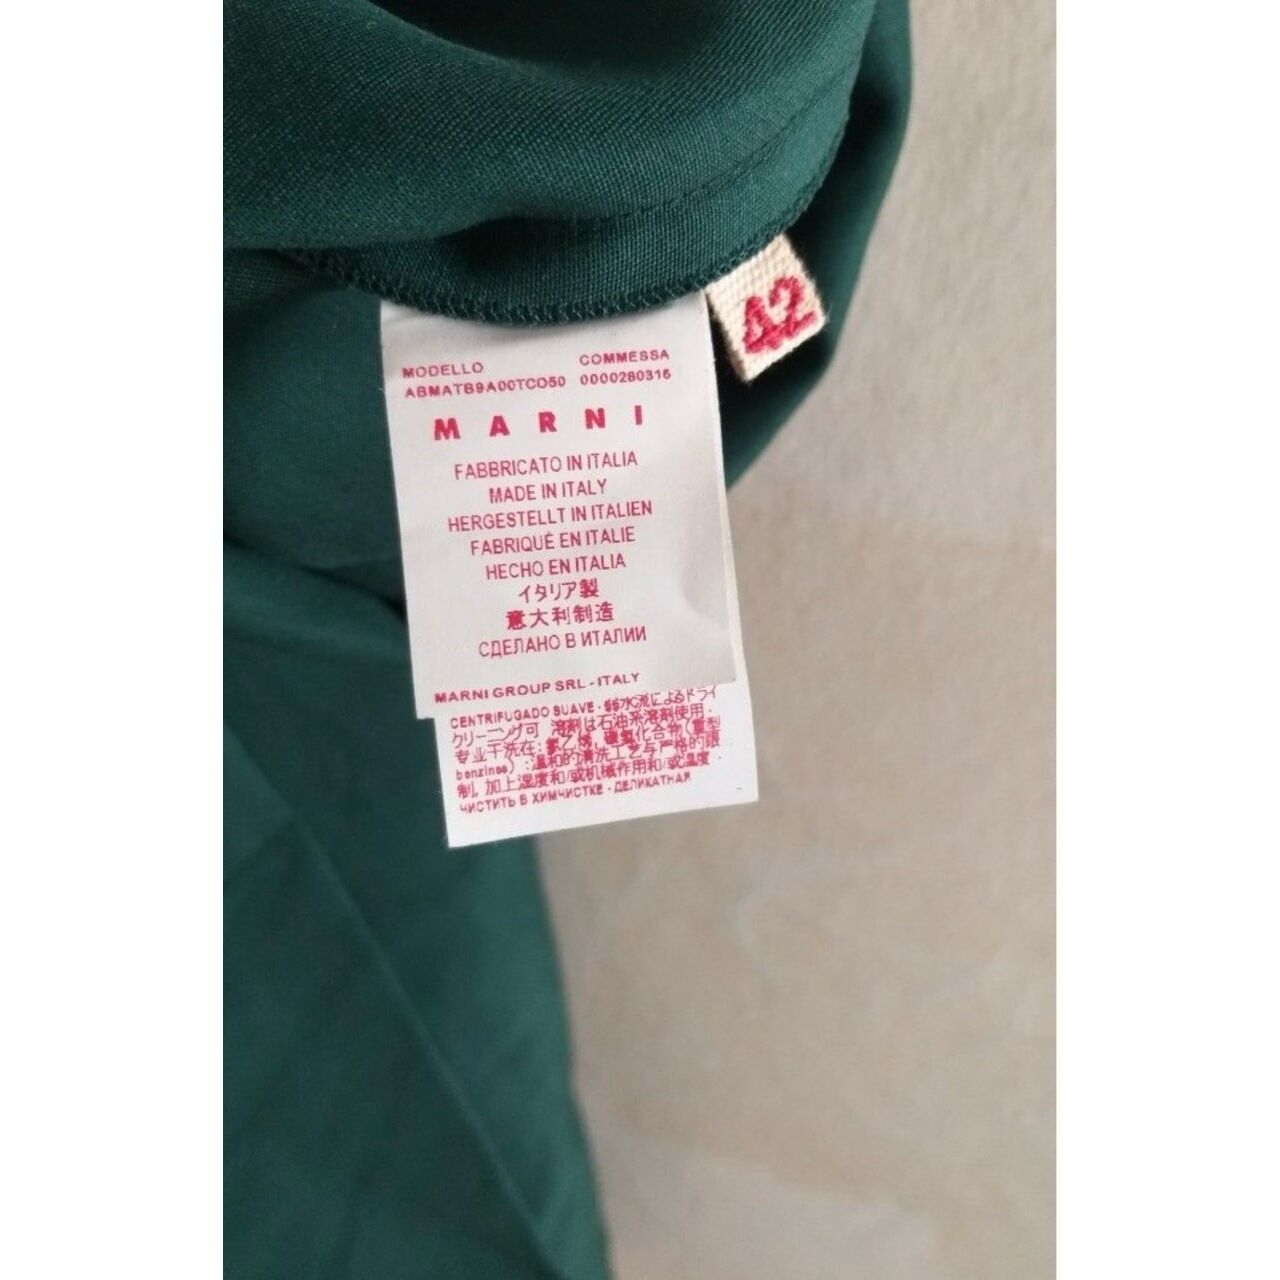 Marni Emerald Sleeveless Midi Dress